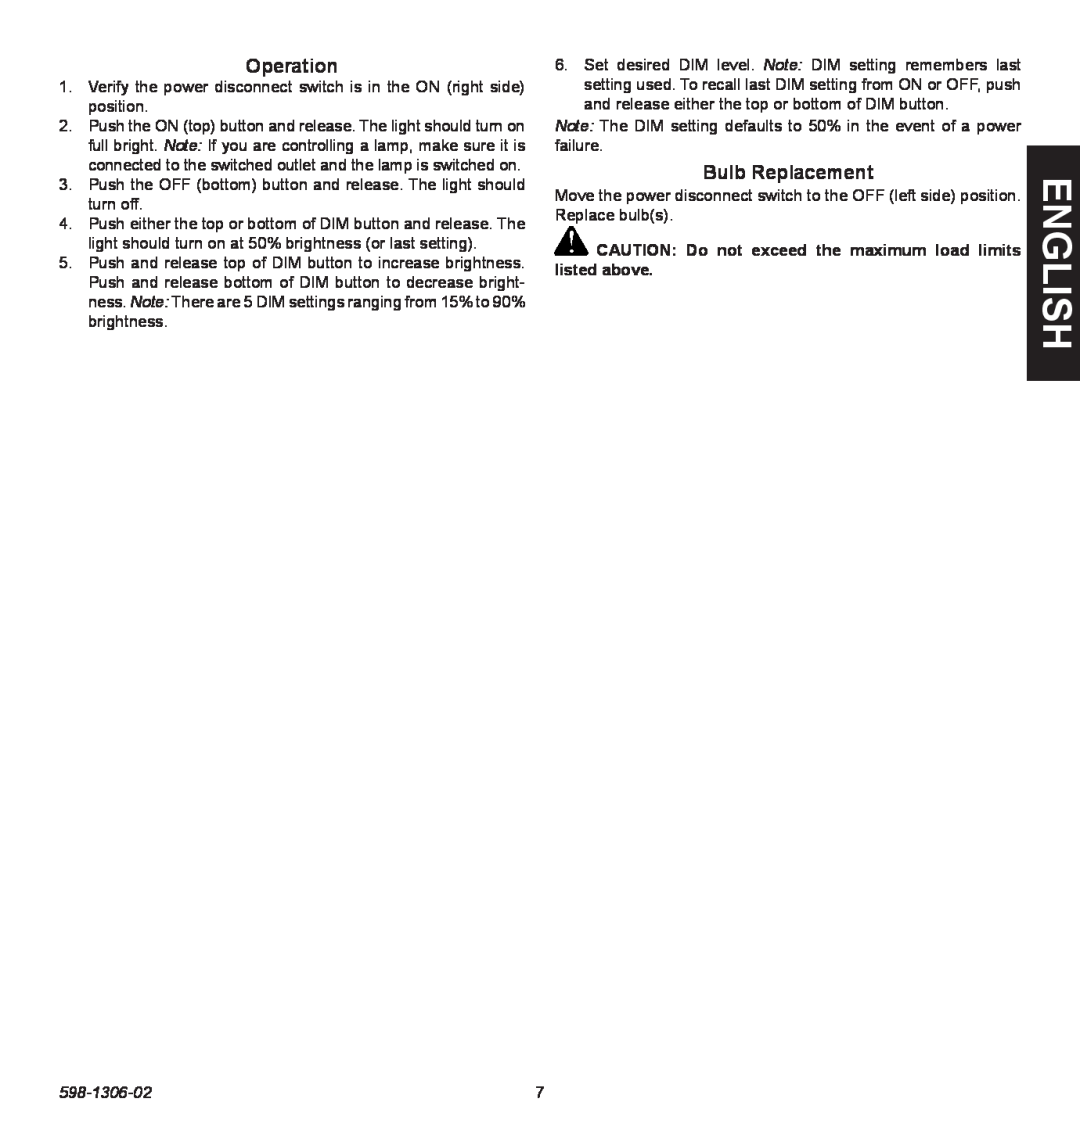 Heath Zenith 598-1306-02 manual English, Operation, Bulb Replacement 